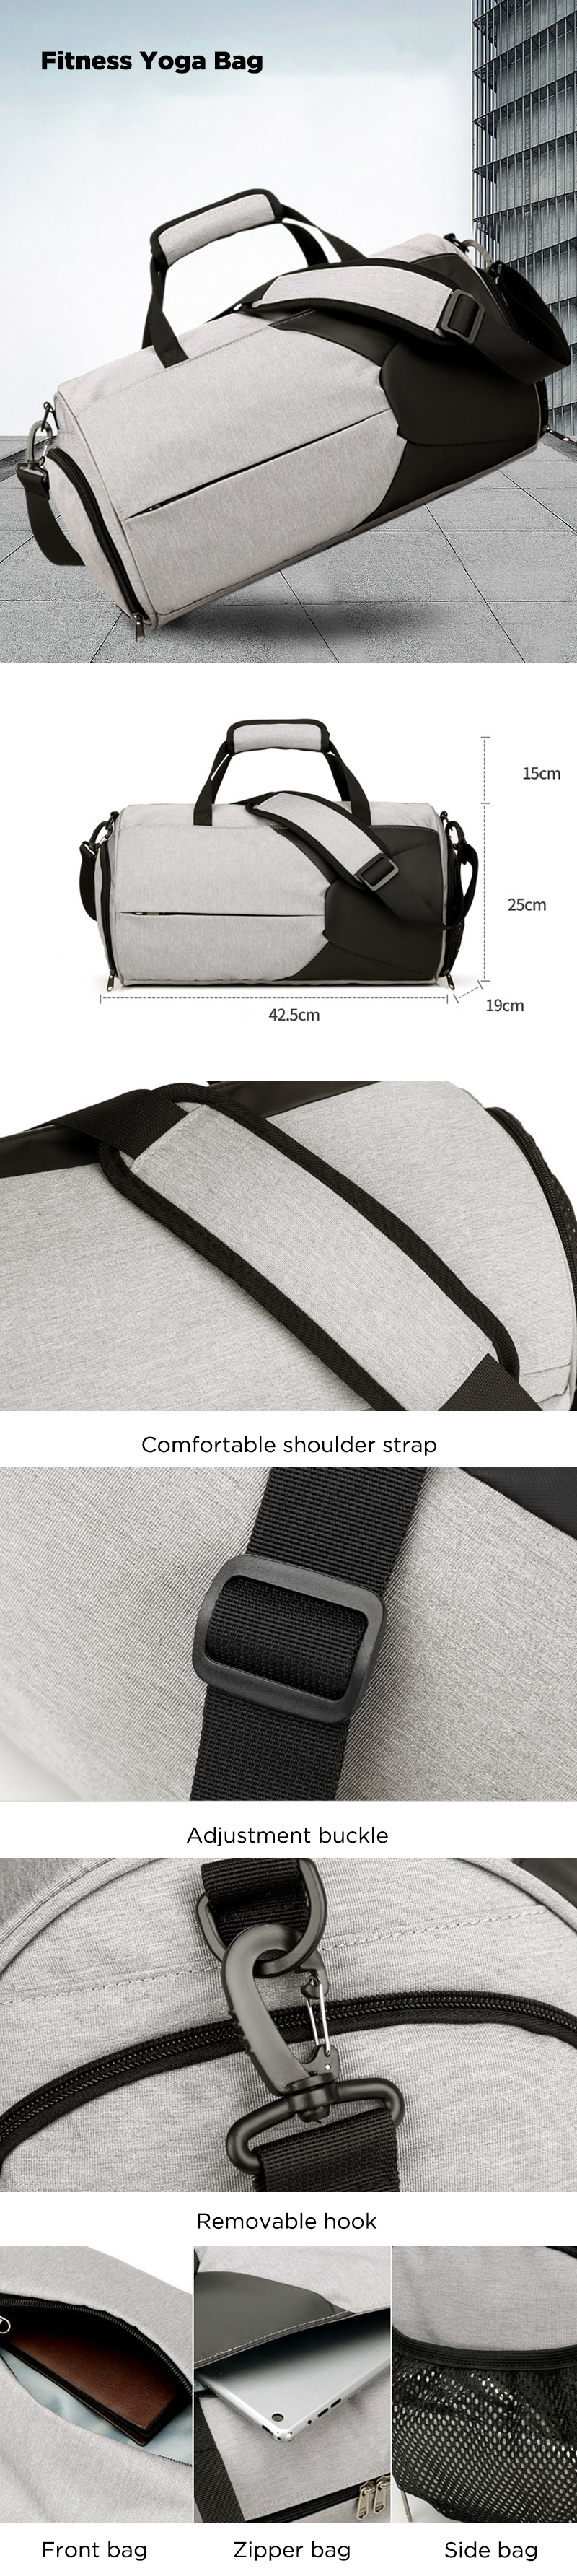 Large-Capacity-Multifunction-Fitness-Yoga-Bag-Gym-Training-Shoulder-Crossbody-Bag-Storage-Handbag-1622742-1